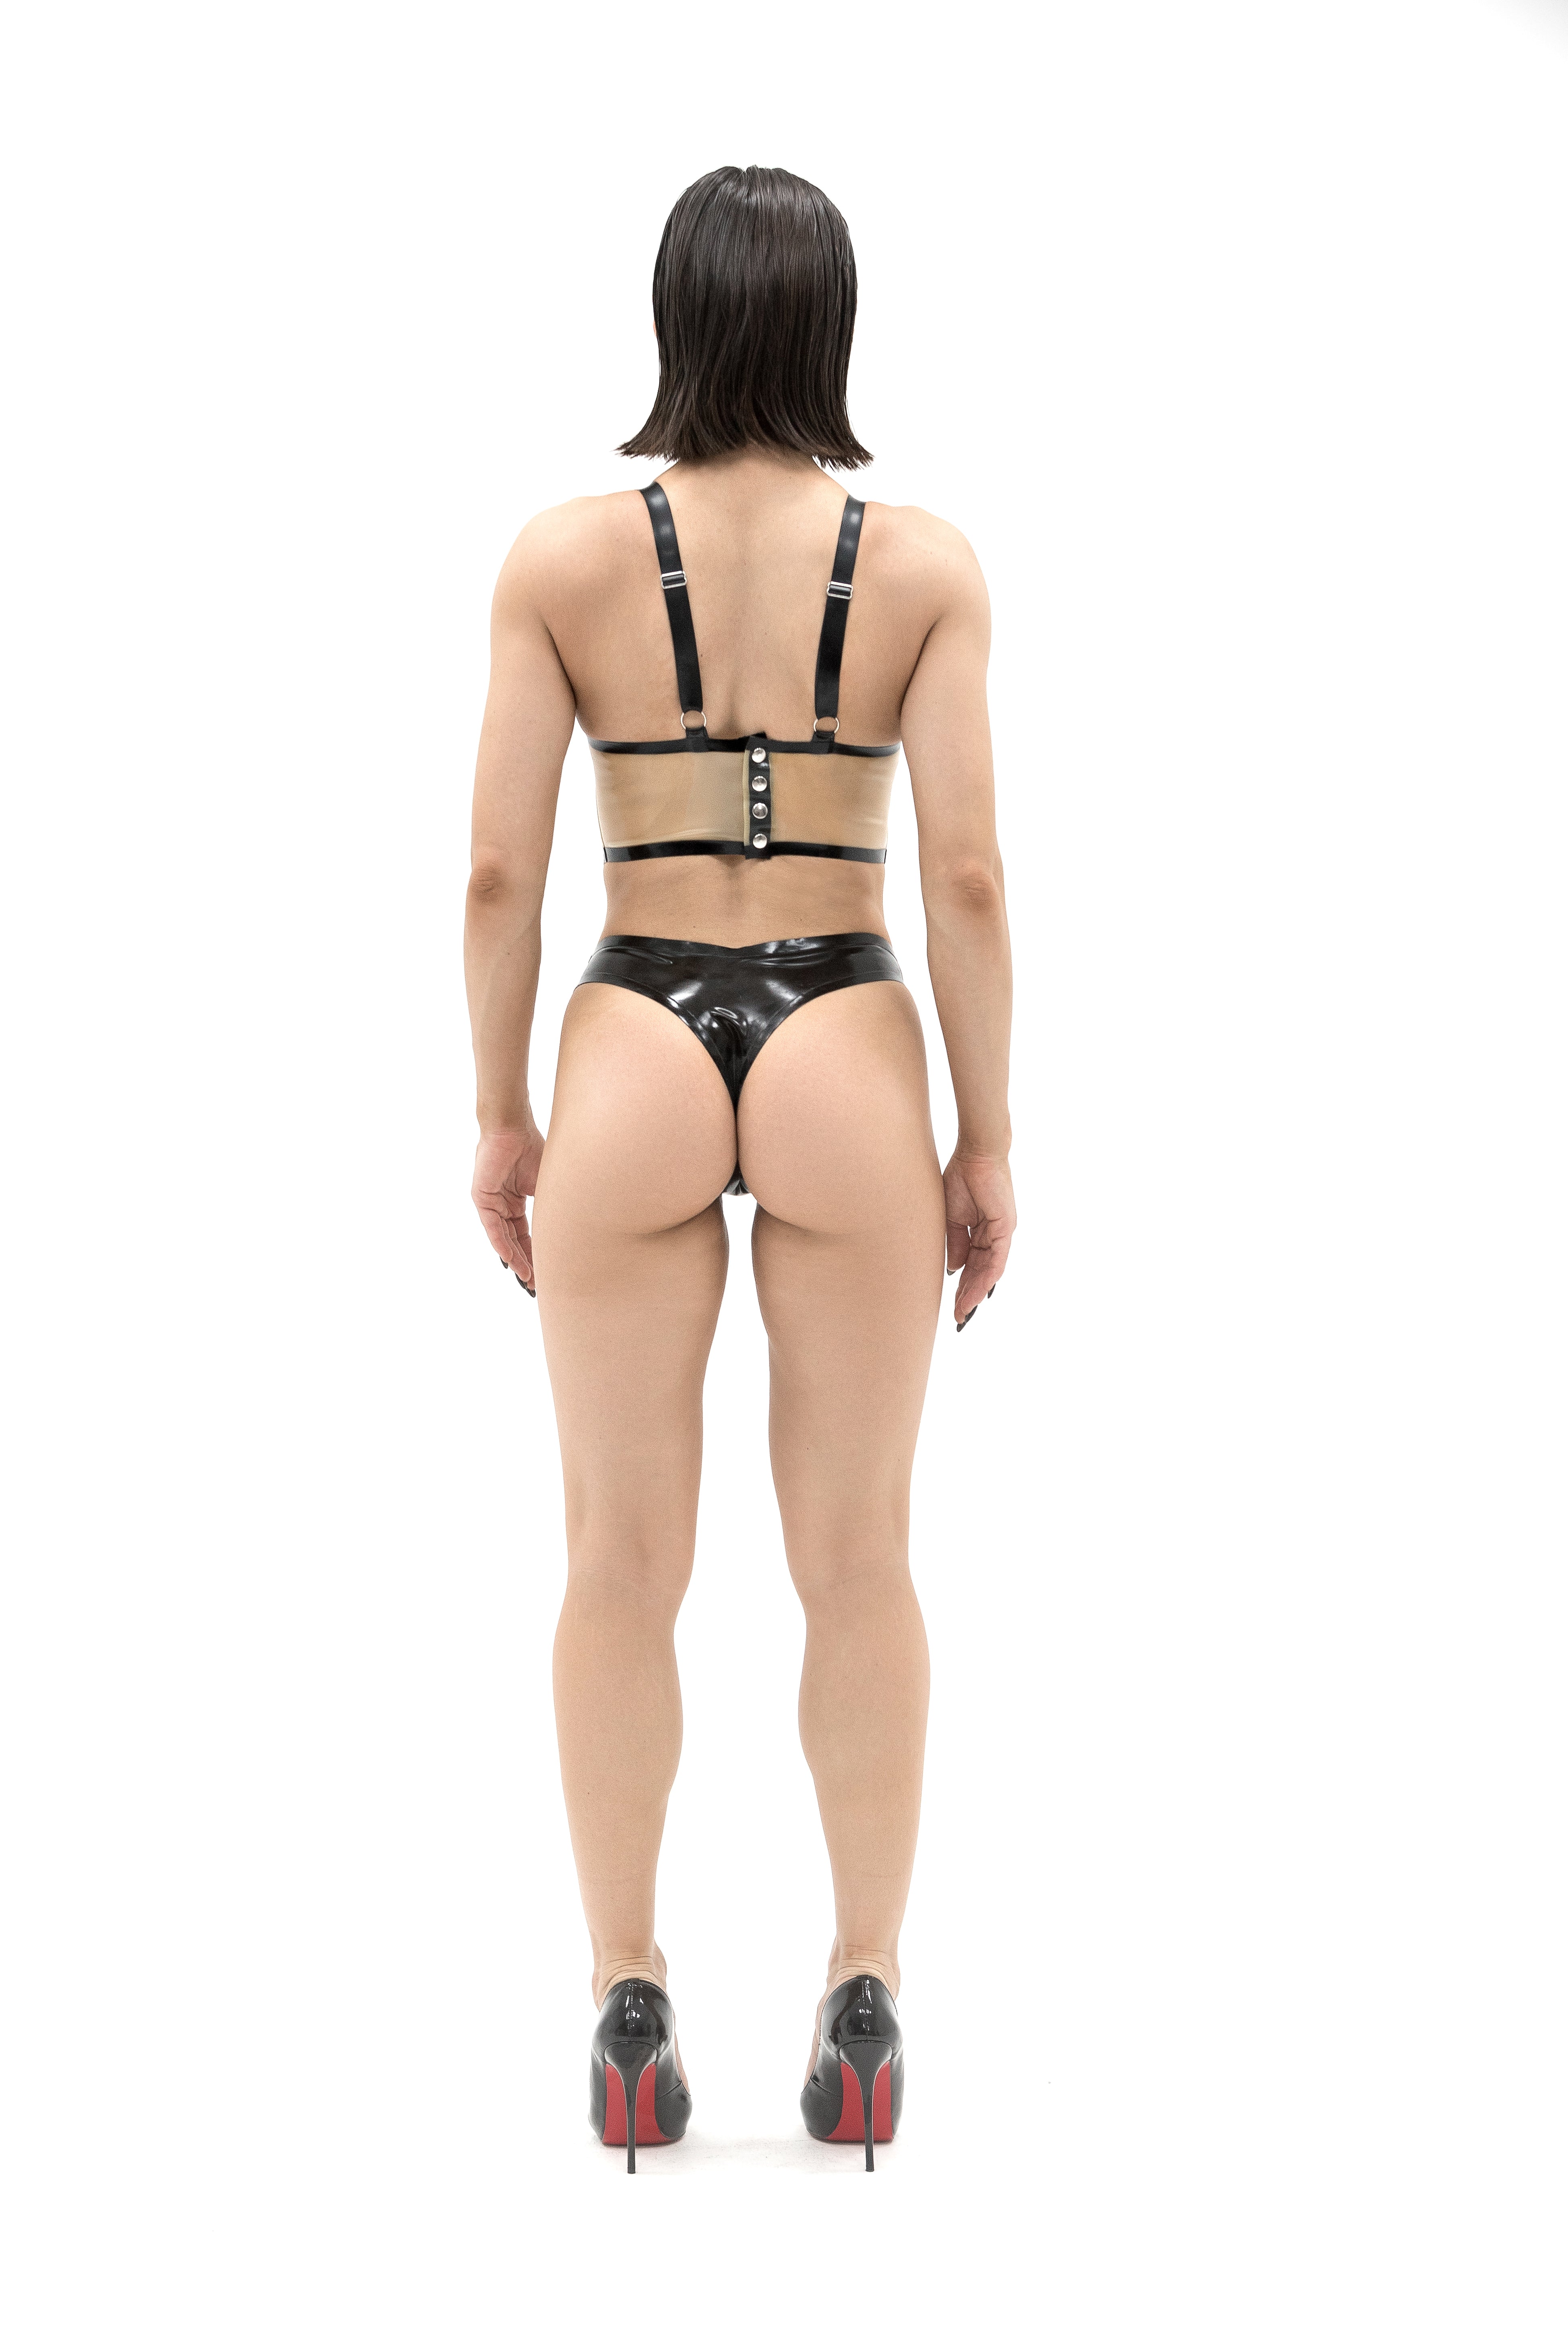 BOHEMIA Latex Lingerie Set - bra and thong nude